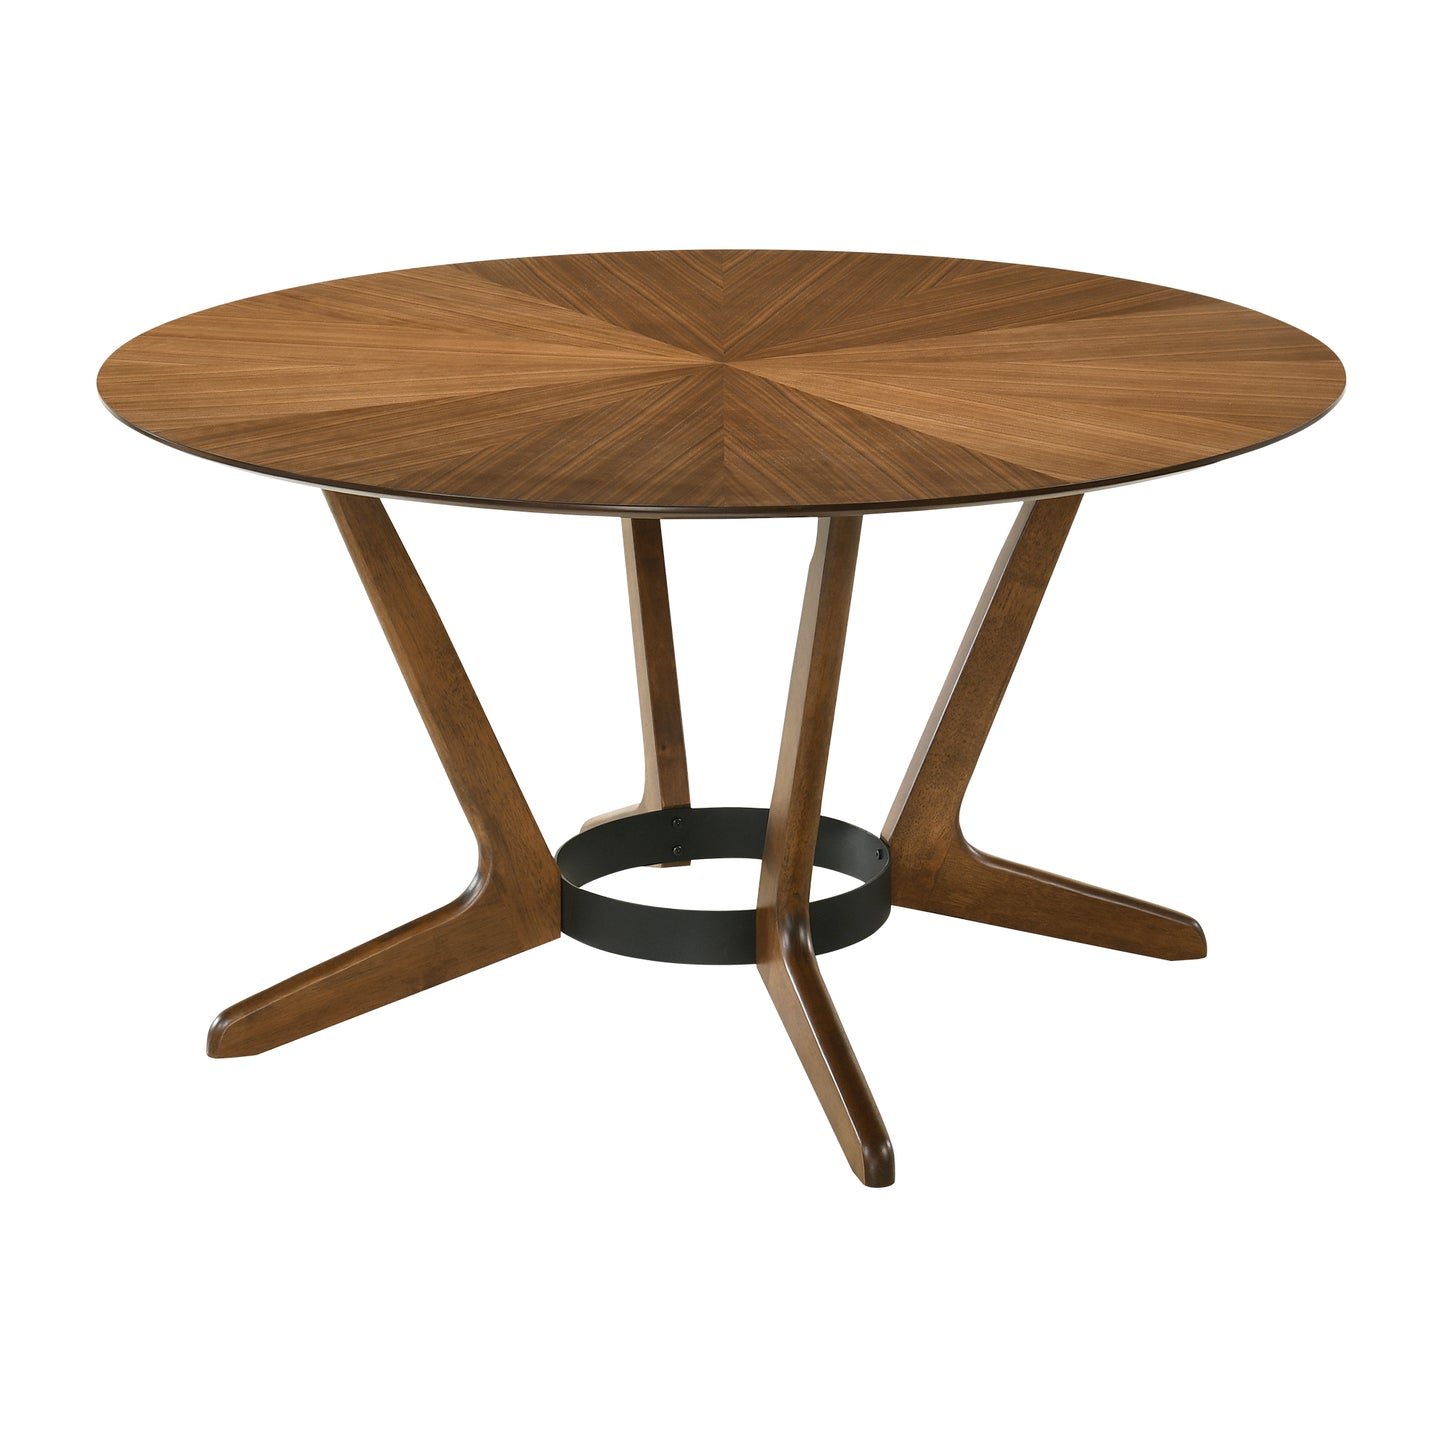 Santana 5 Piece Round Walnut Wood Dining Table Set with Charcoal Fabric